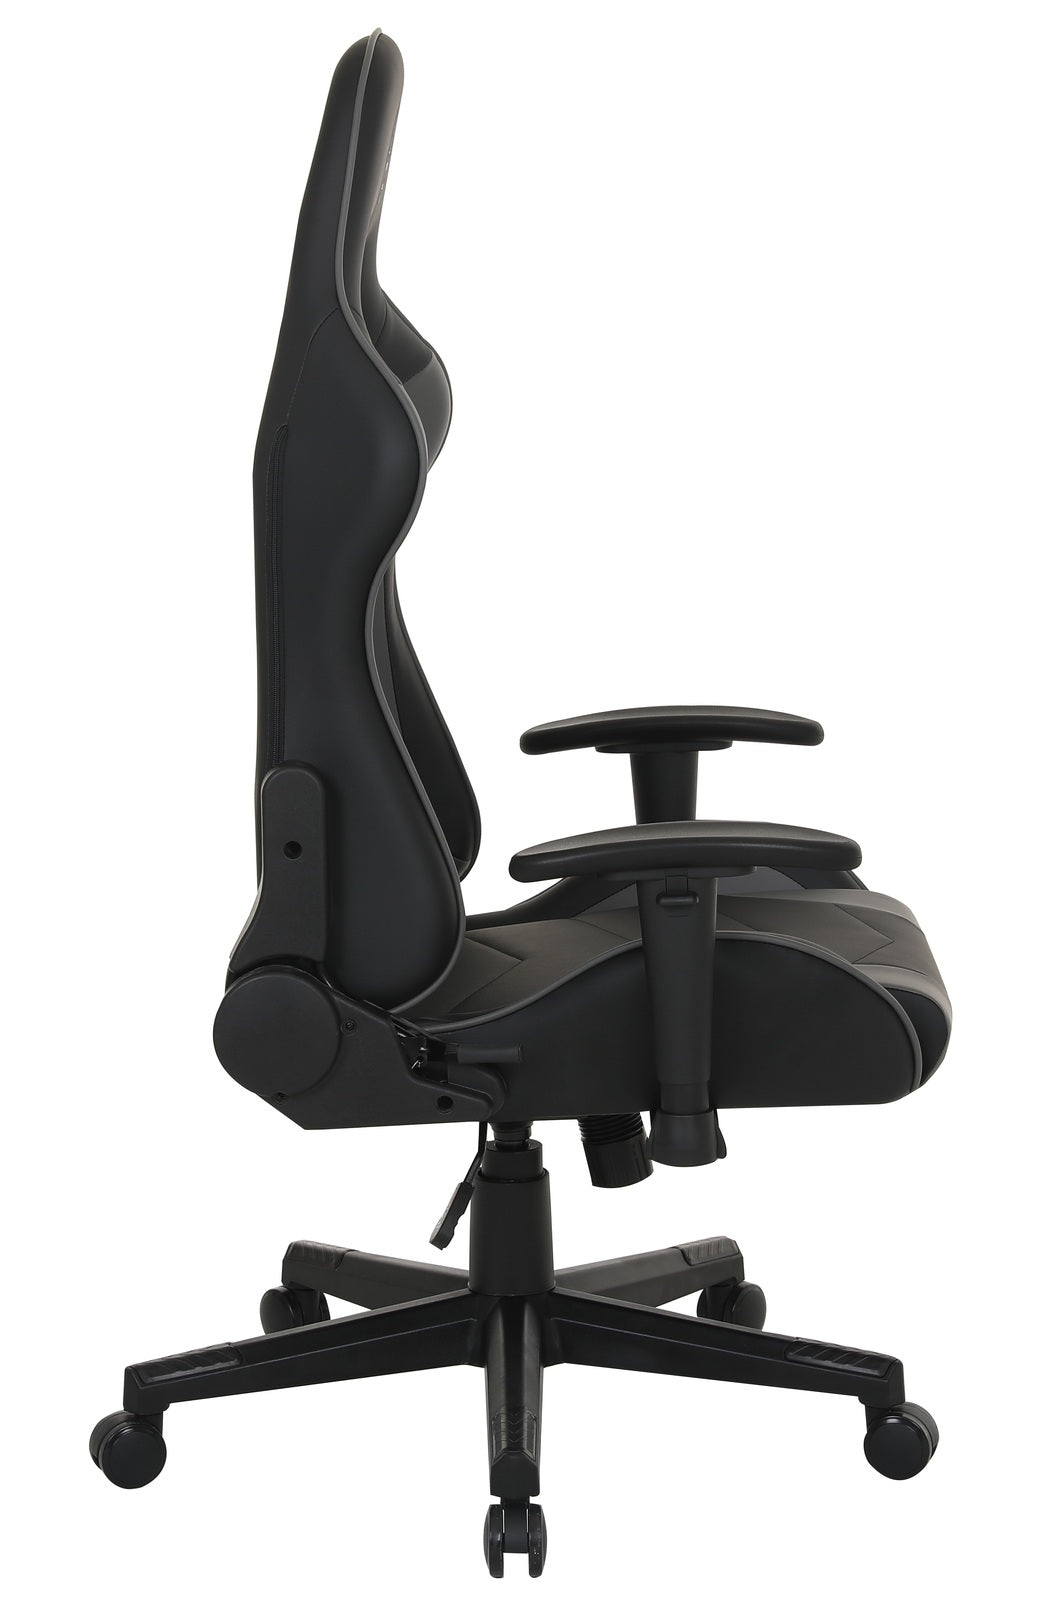 Gorilla Gaming Commander Chair - Black/Grey - Xbox Series X